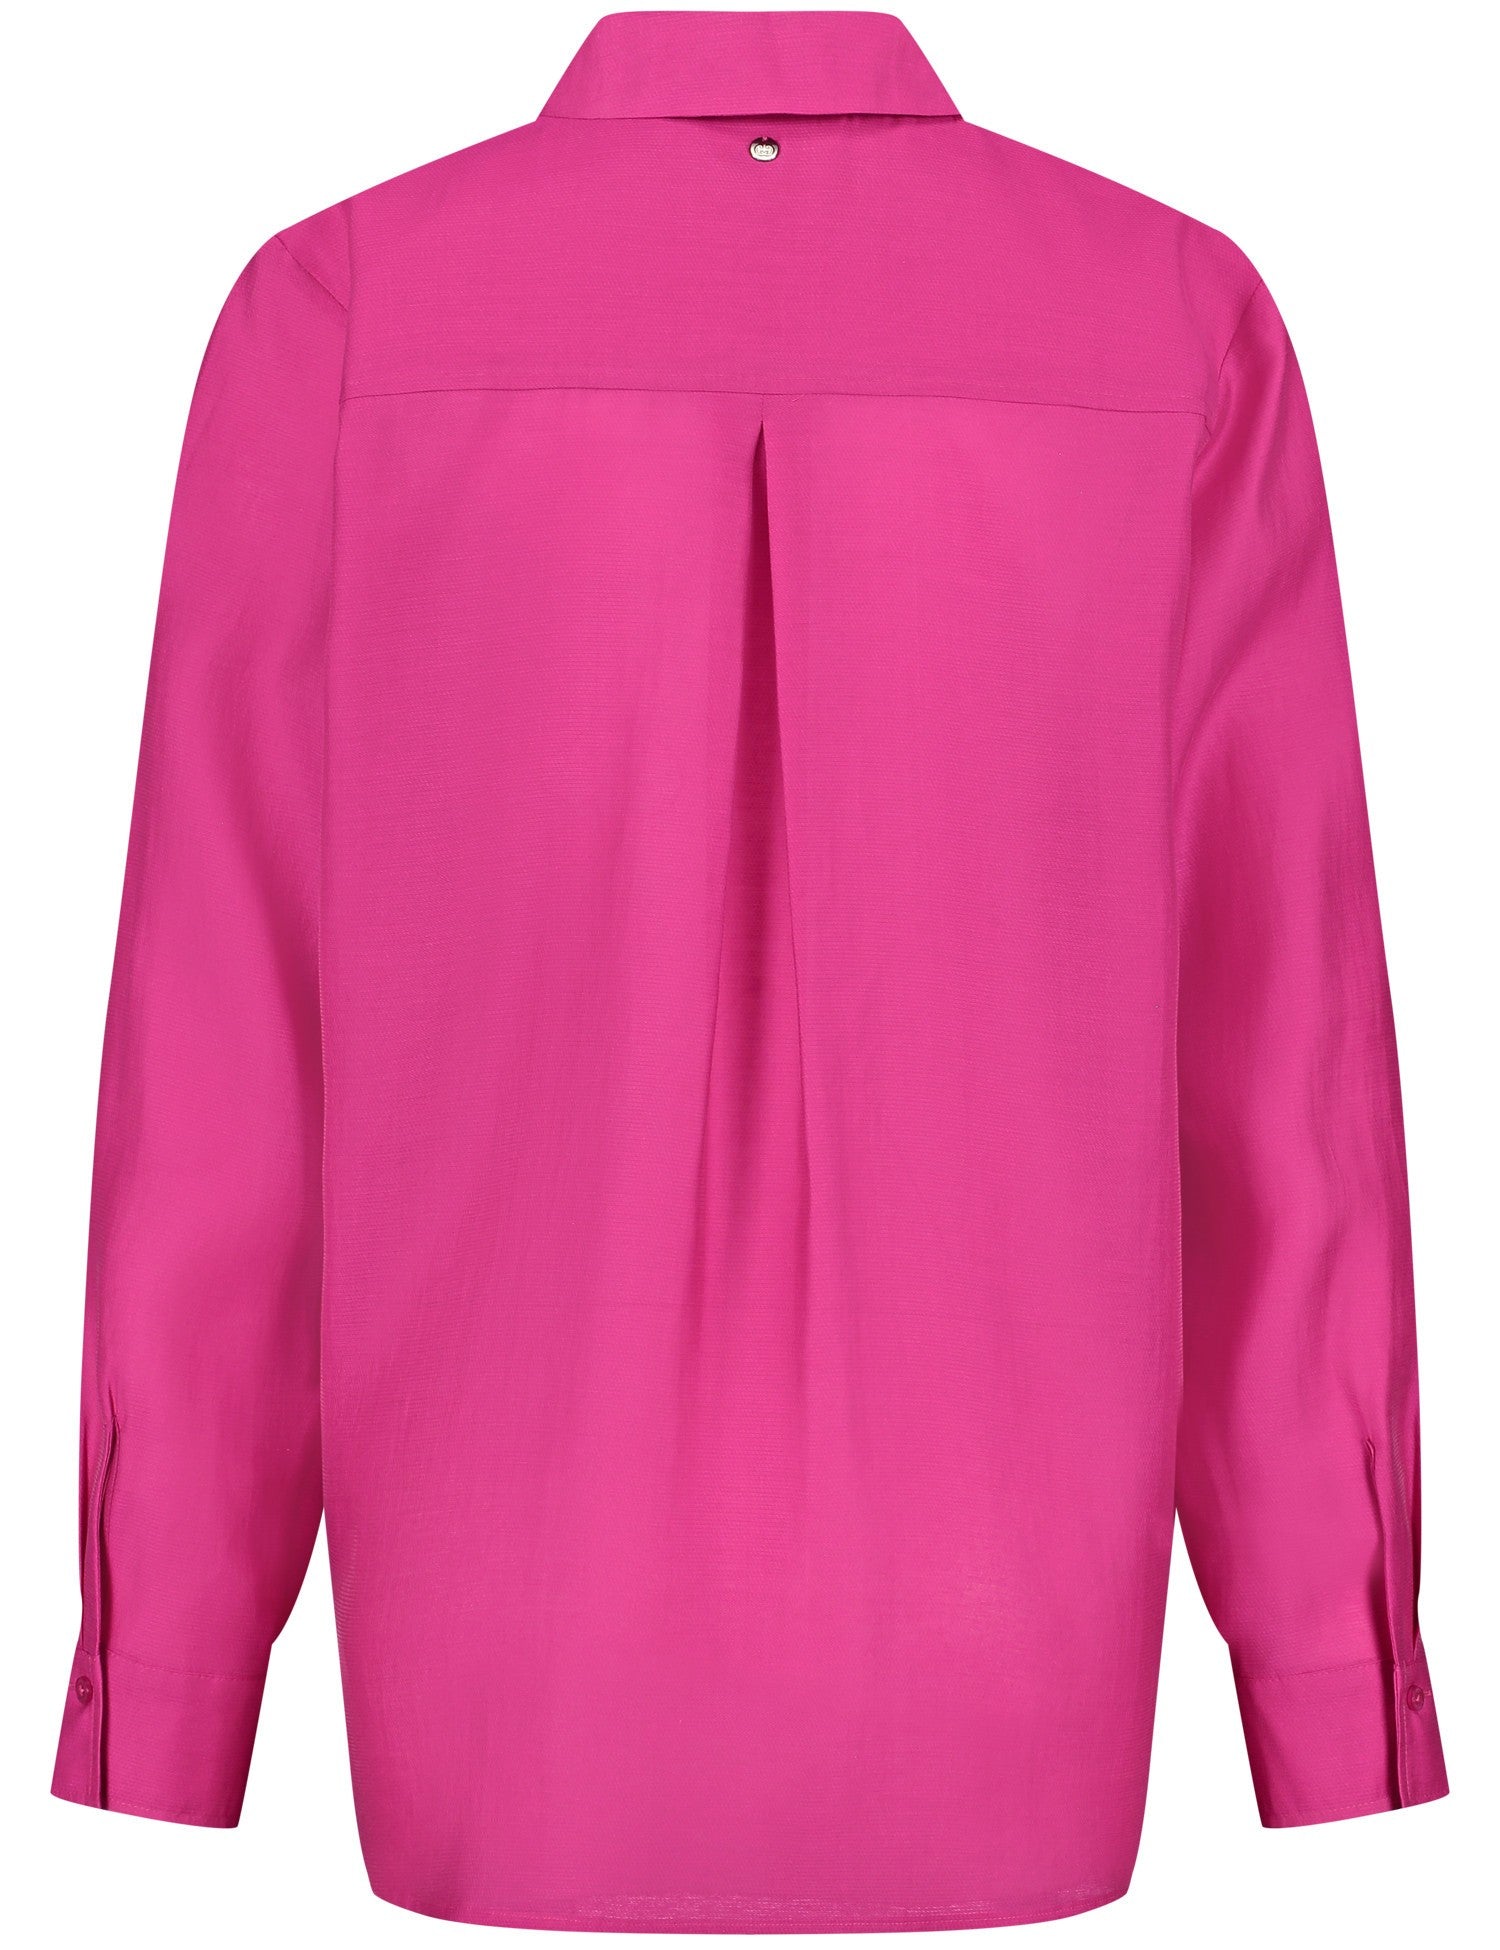 Gerry Weber Pink Elegant Shirt